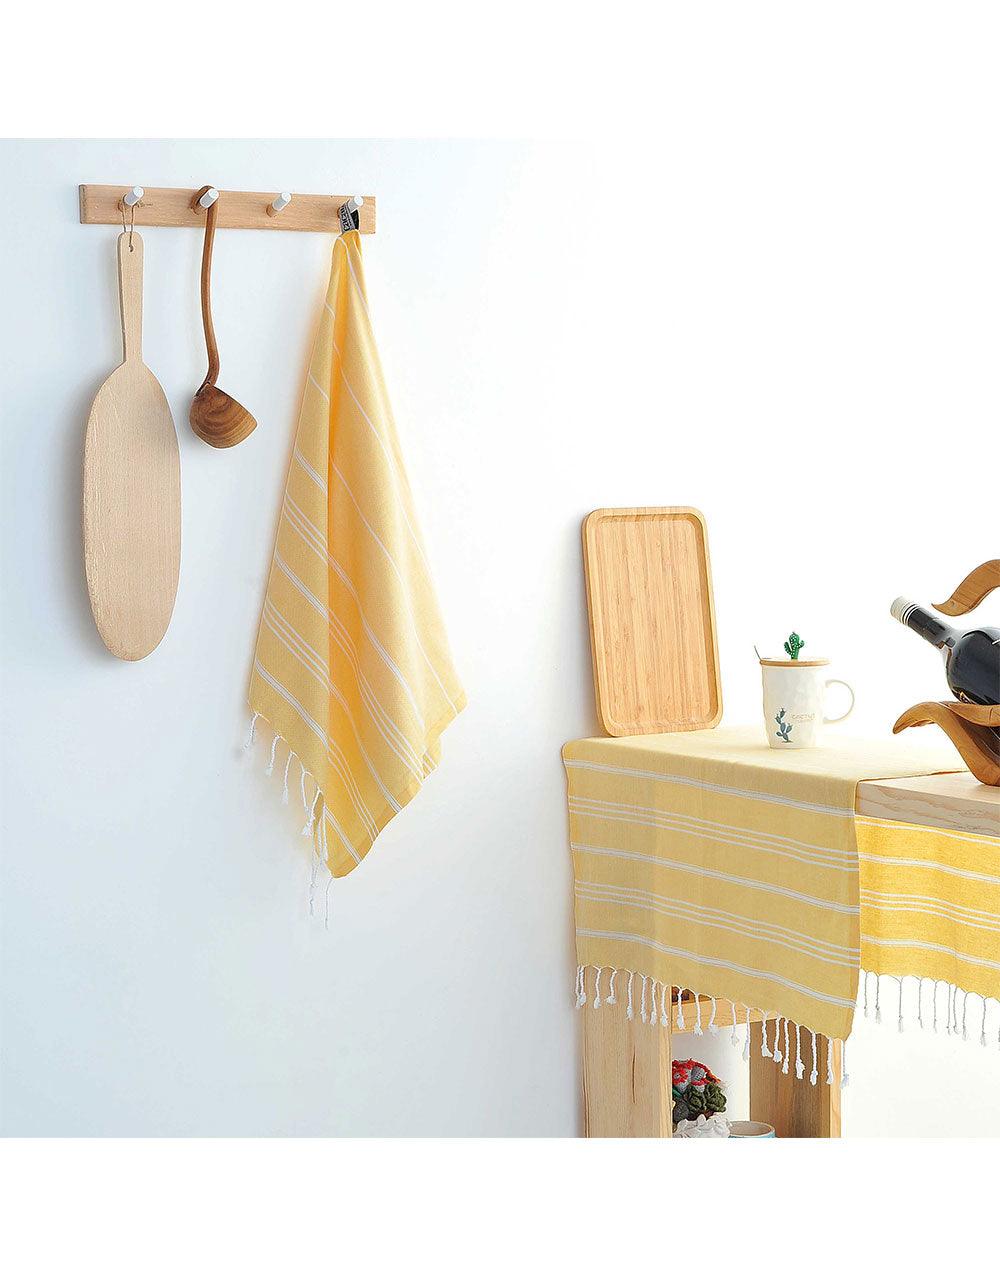 Cacala Turkish Hand Towel Set 4 Peskirs 60 x 90 cm Apricot 100% Organic Cotton - Cacala